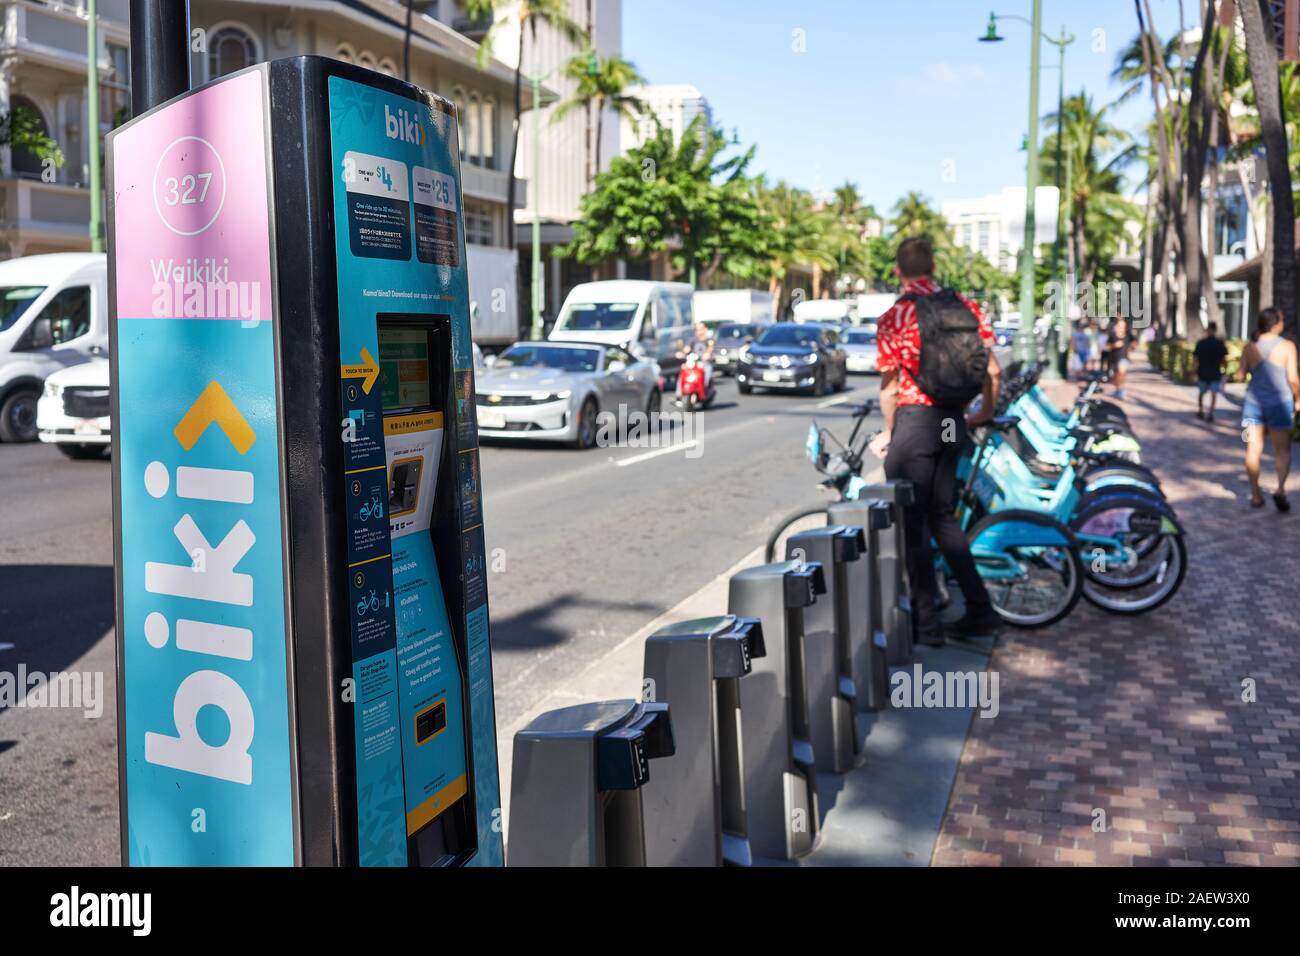 Closeup of a Biki bikeshare self-service kiosk at a Biki stop in the Waikiki neighborhood in Honolulu, Hawaii, seen on Monday, Nov 25, 2019. Stock Photo